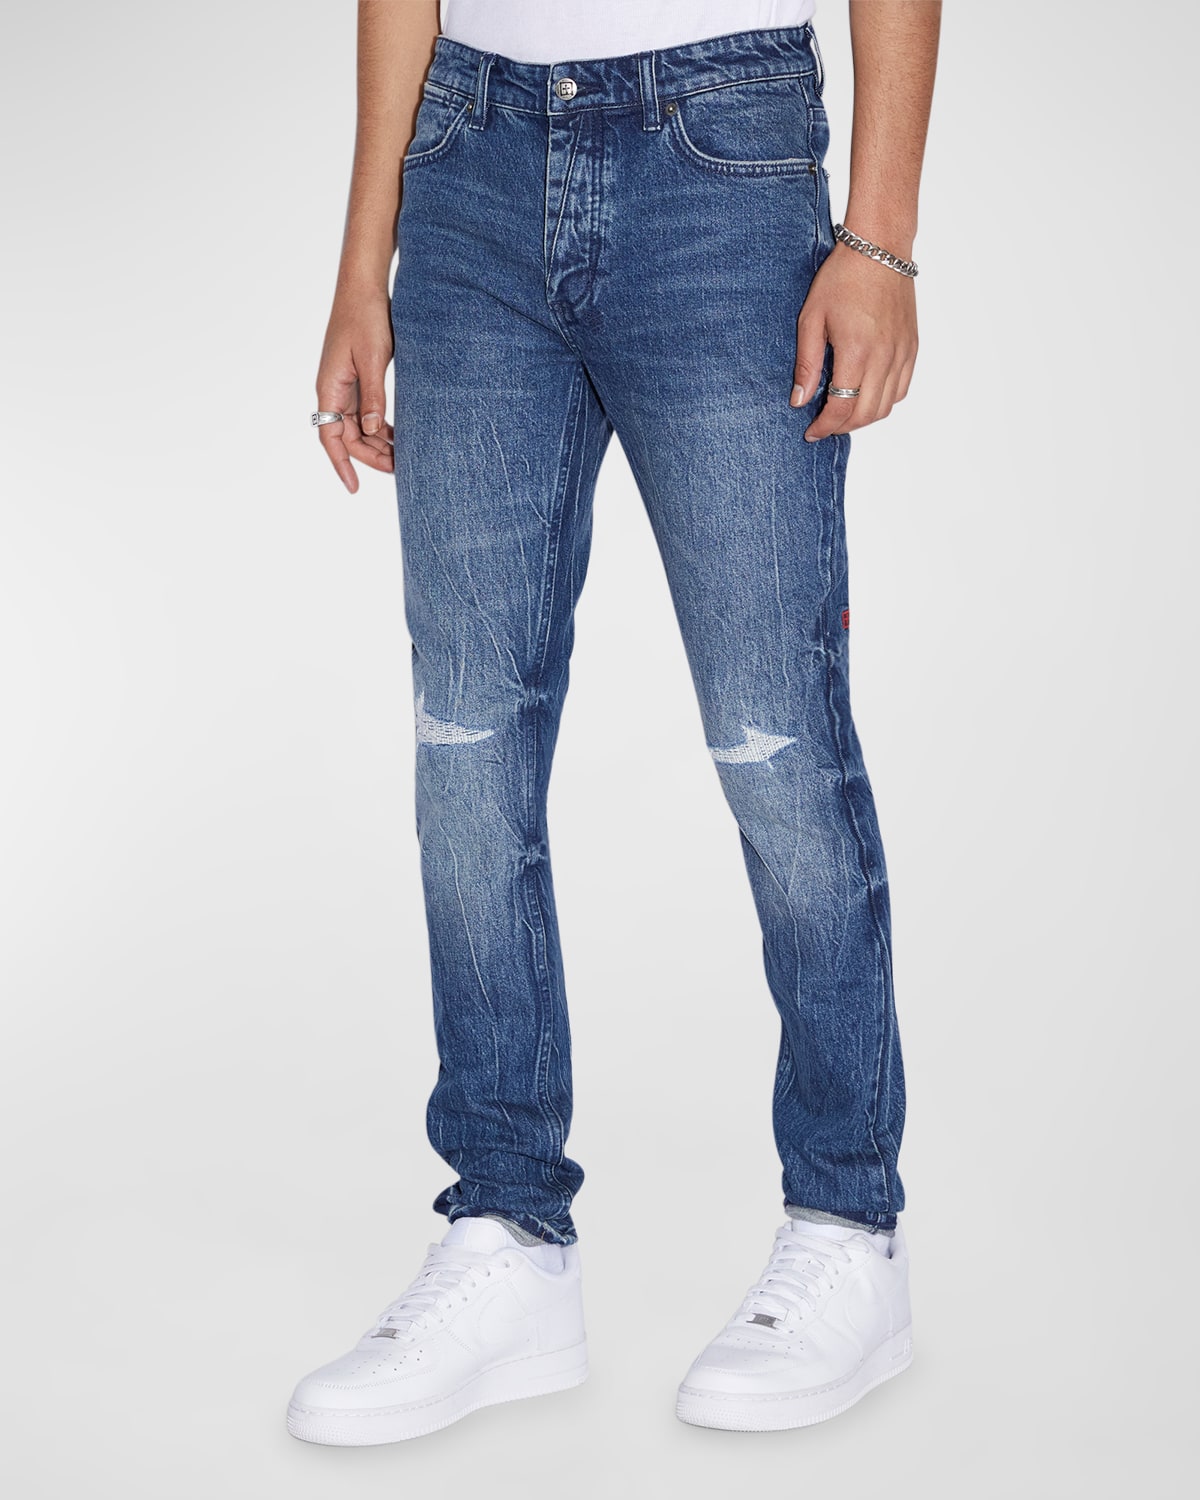 Men's Van Winkle Hilite Trashed Jeans